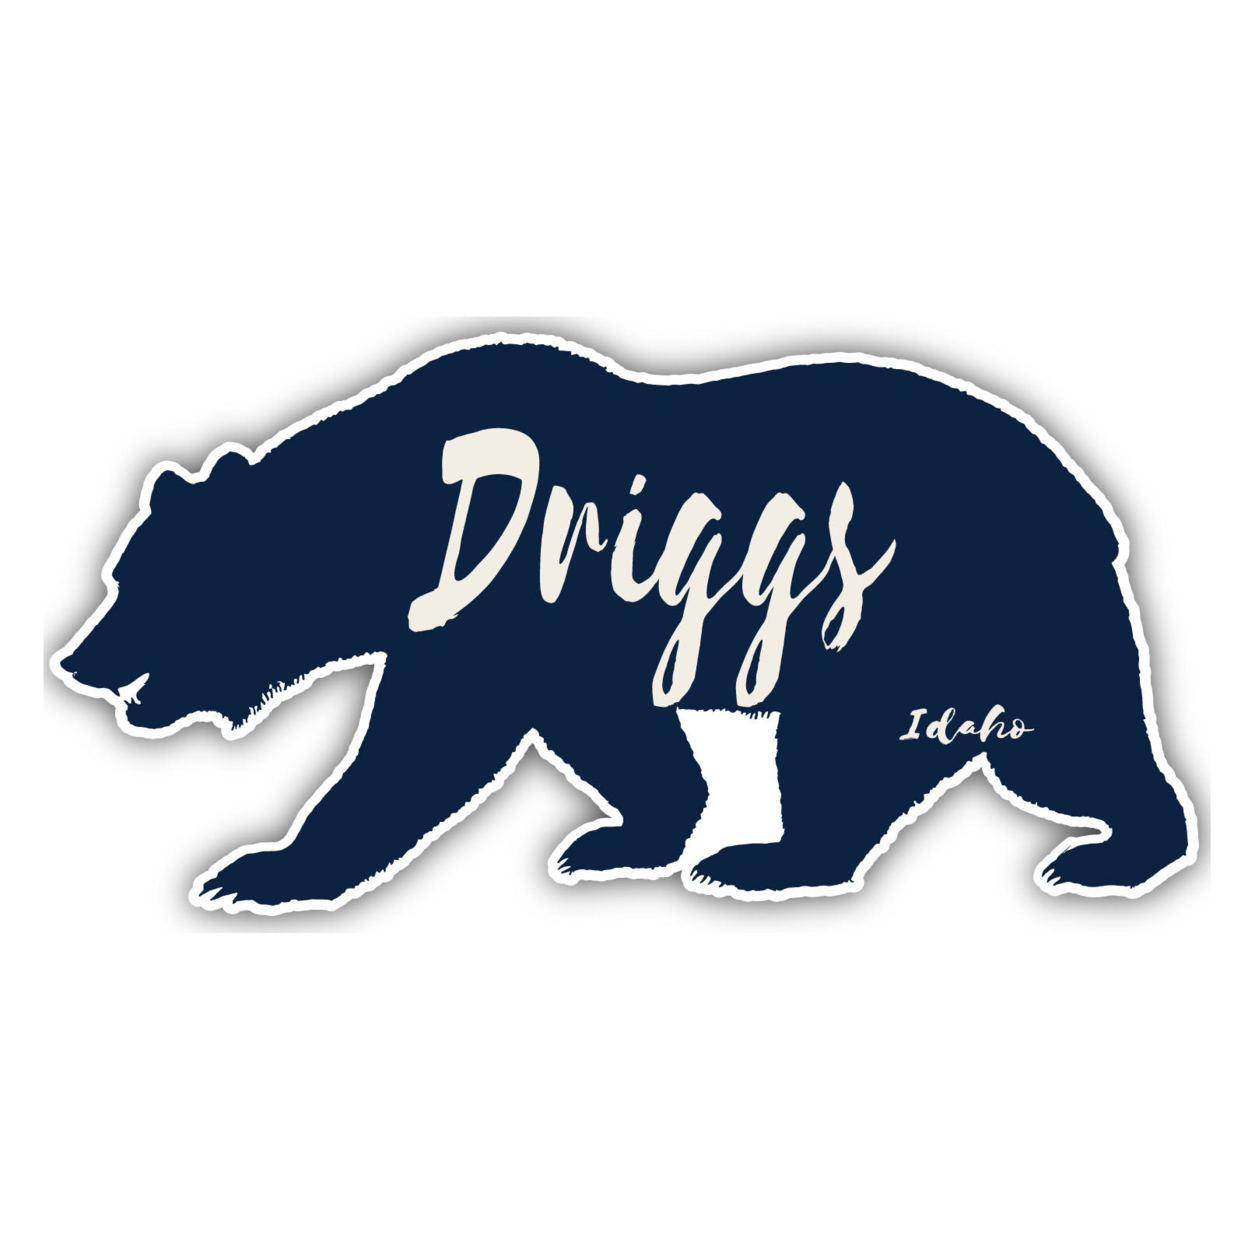 Driggs Idaho Souvenir Decorative Stickers (Choose Theme And Size) - Single Unit, 6-Inch, Tent